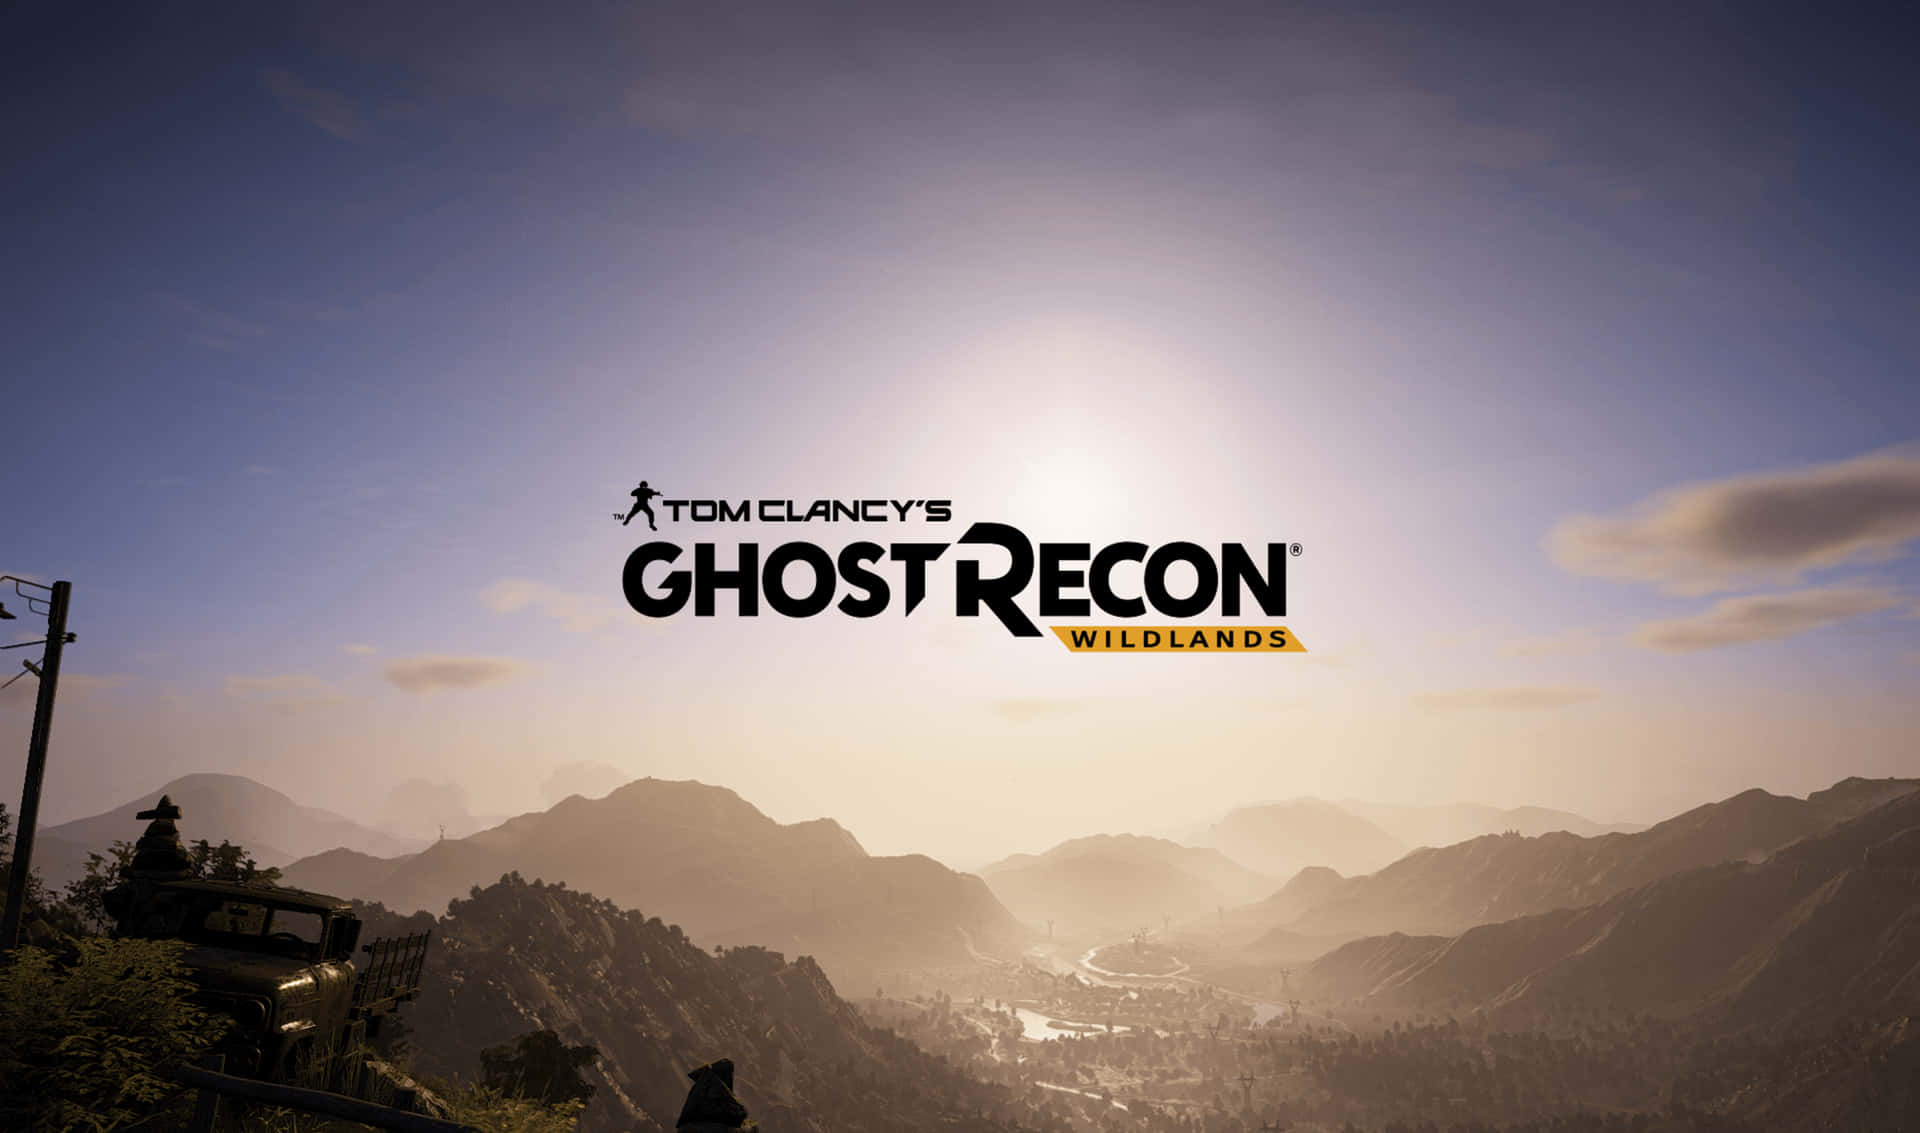 2440x1440 Ghost Recon Wildlands Game Title Poster Landscape Background